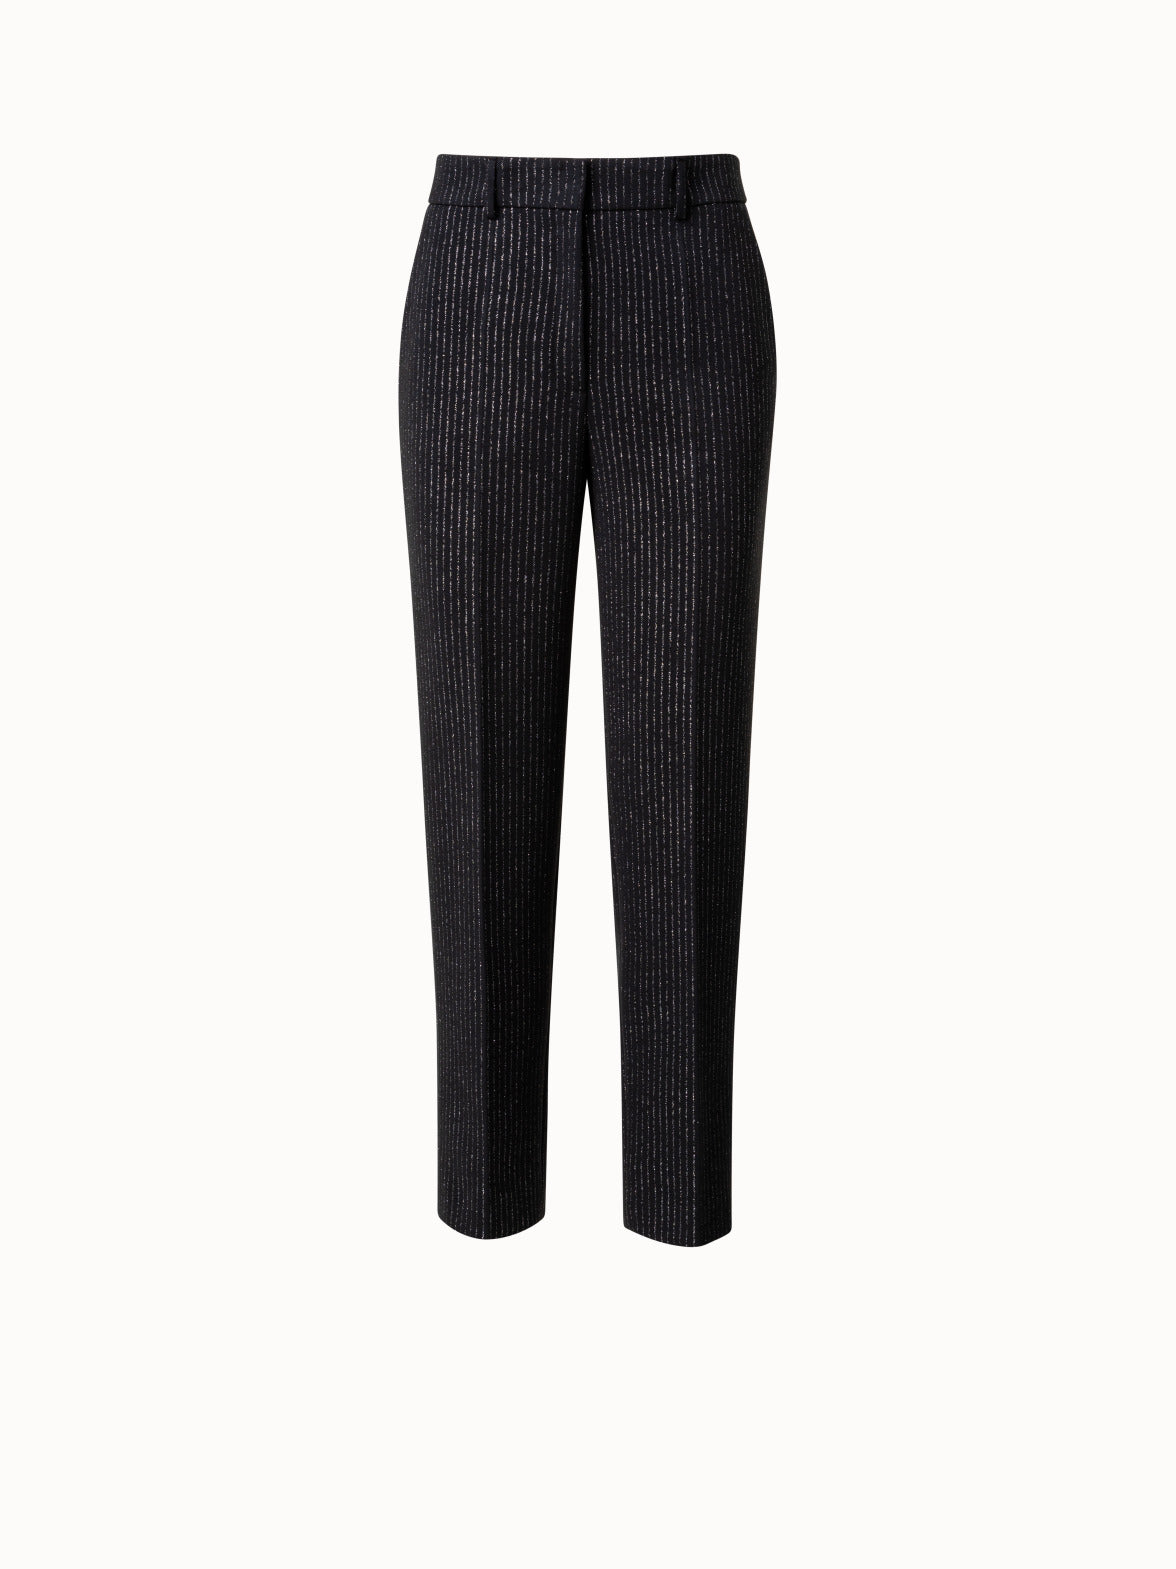 Buy Navy Jersey Wide Leg Side Stripe Trousers from the Next UK online shop